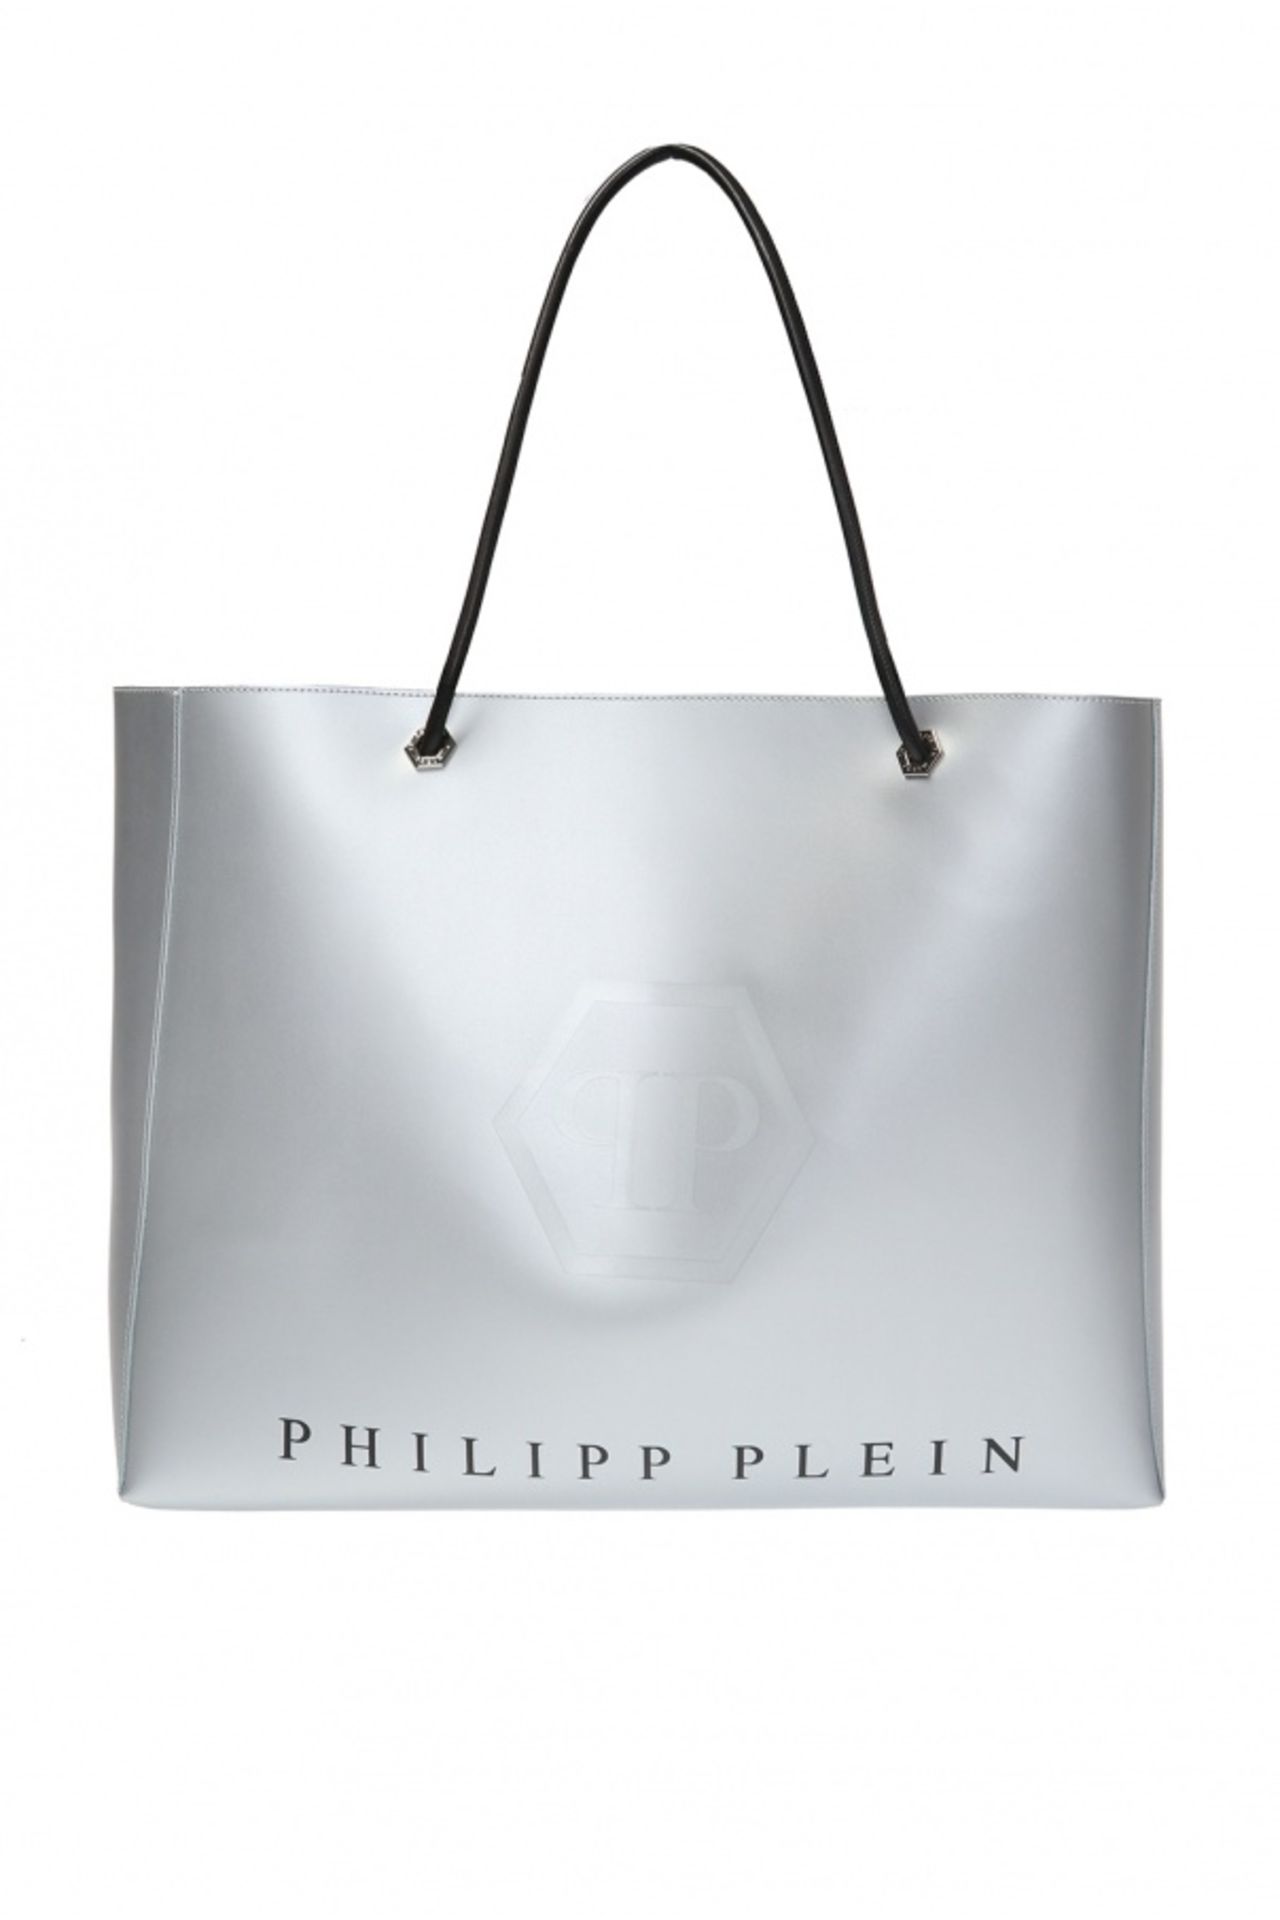 PHILIPP PLEIN. BRANDED SHOPPER BAG. Grey shopper bag from Philipp Plein. Made of calf leather.